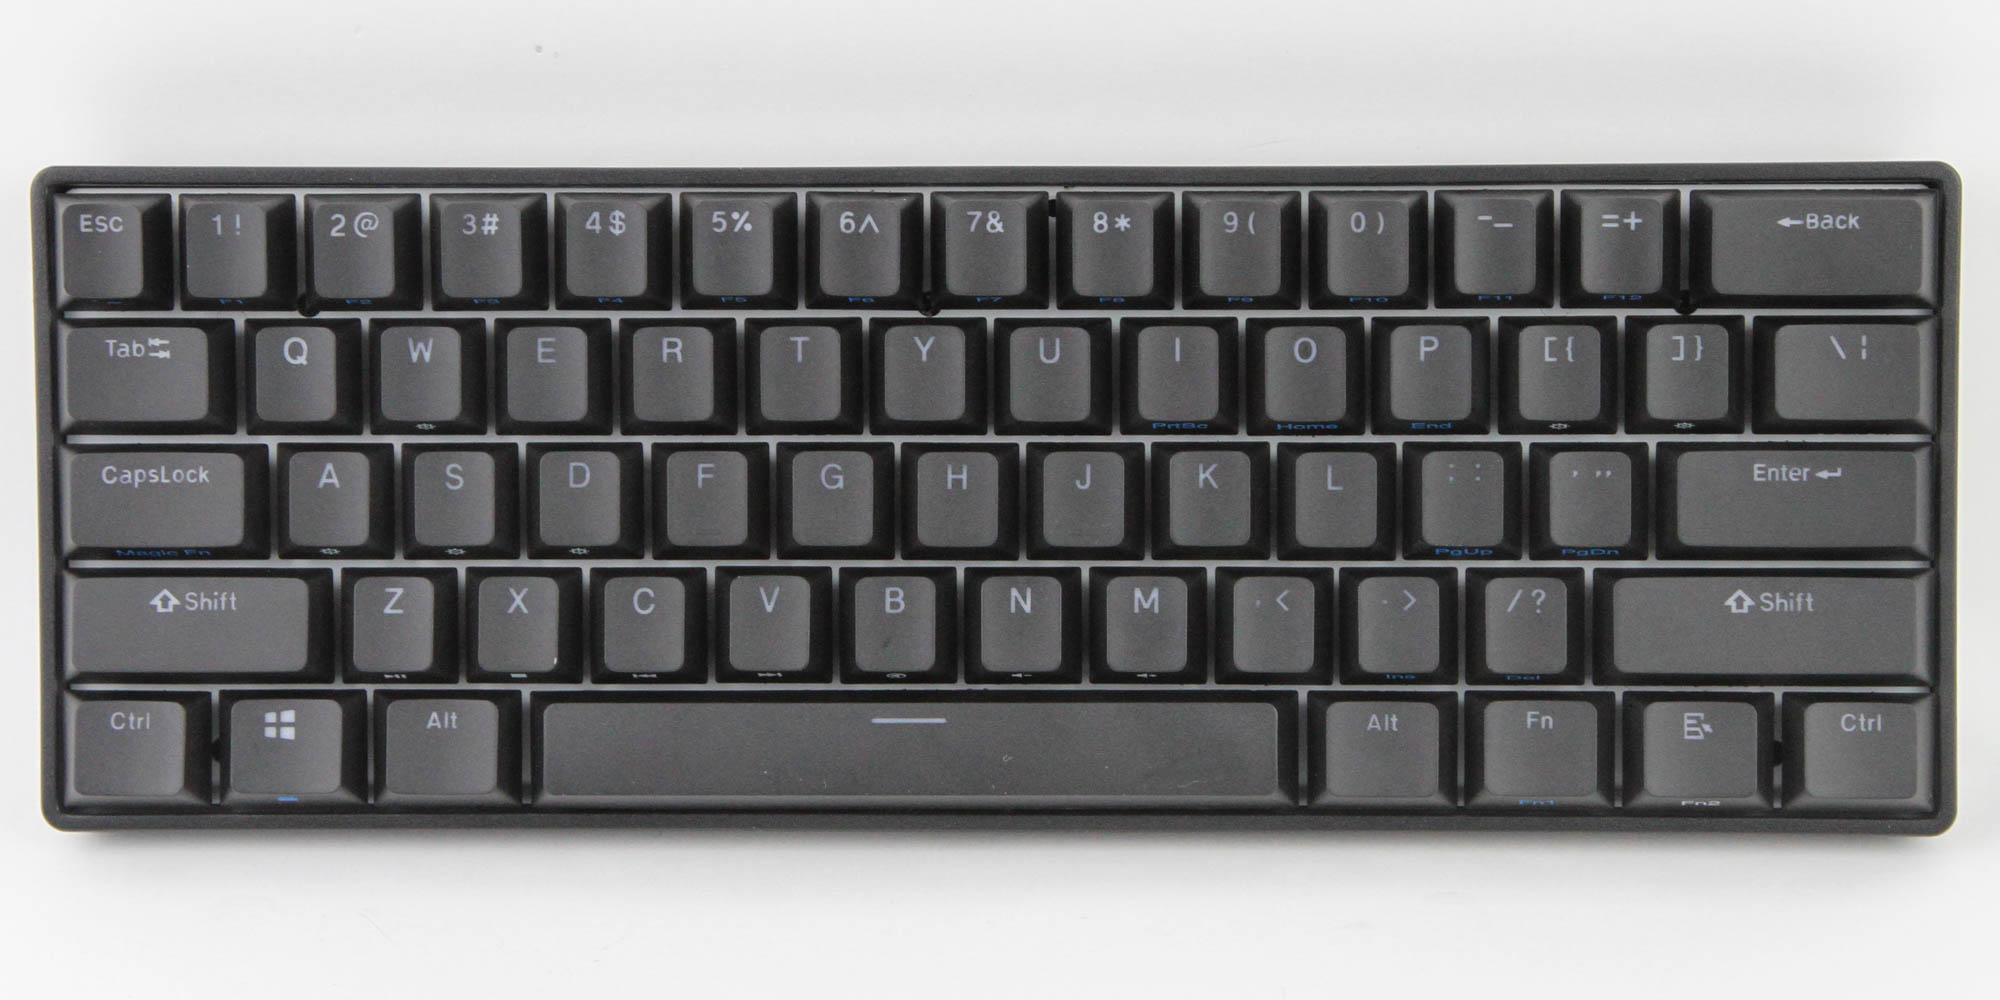 Ranked Nova n60 Mechanical Keyboard Review - Closer Examination